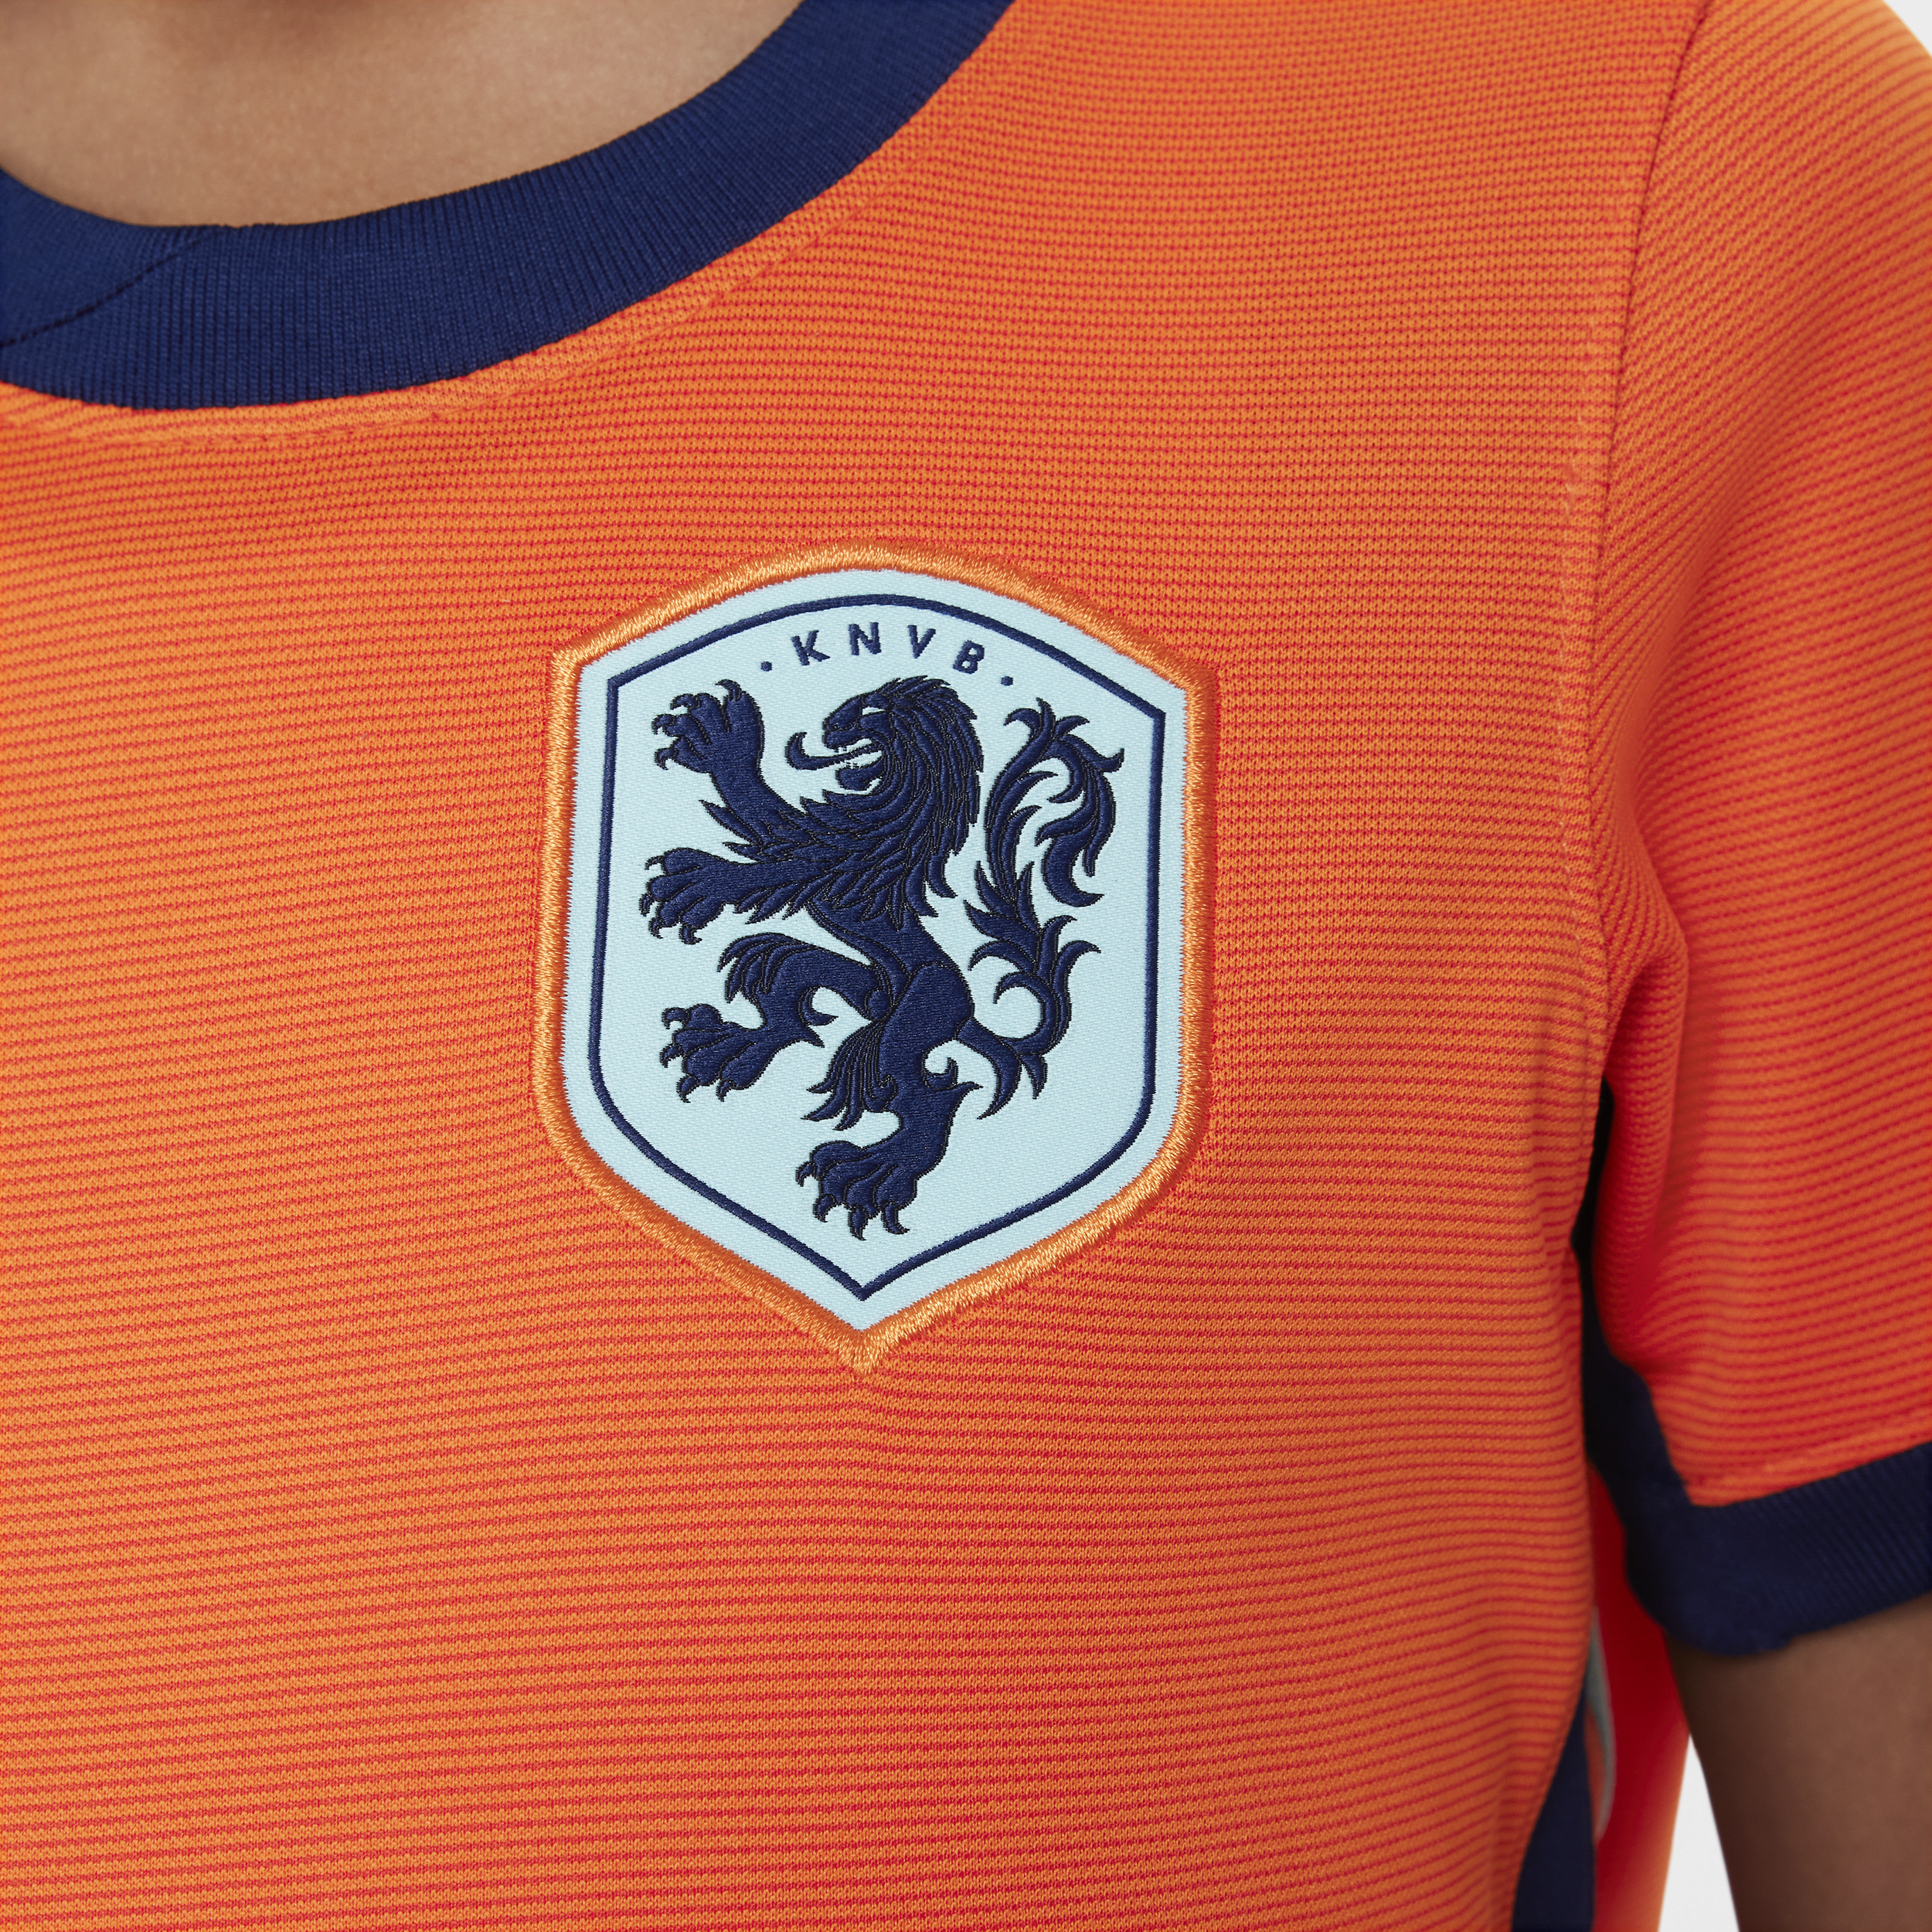 Nike Nederland 2024 Stadium Thuis driedelig replica voetbaltenue voor kleuters Oranje